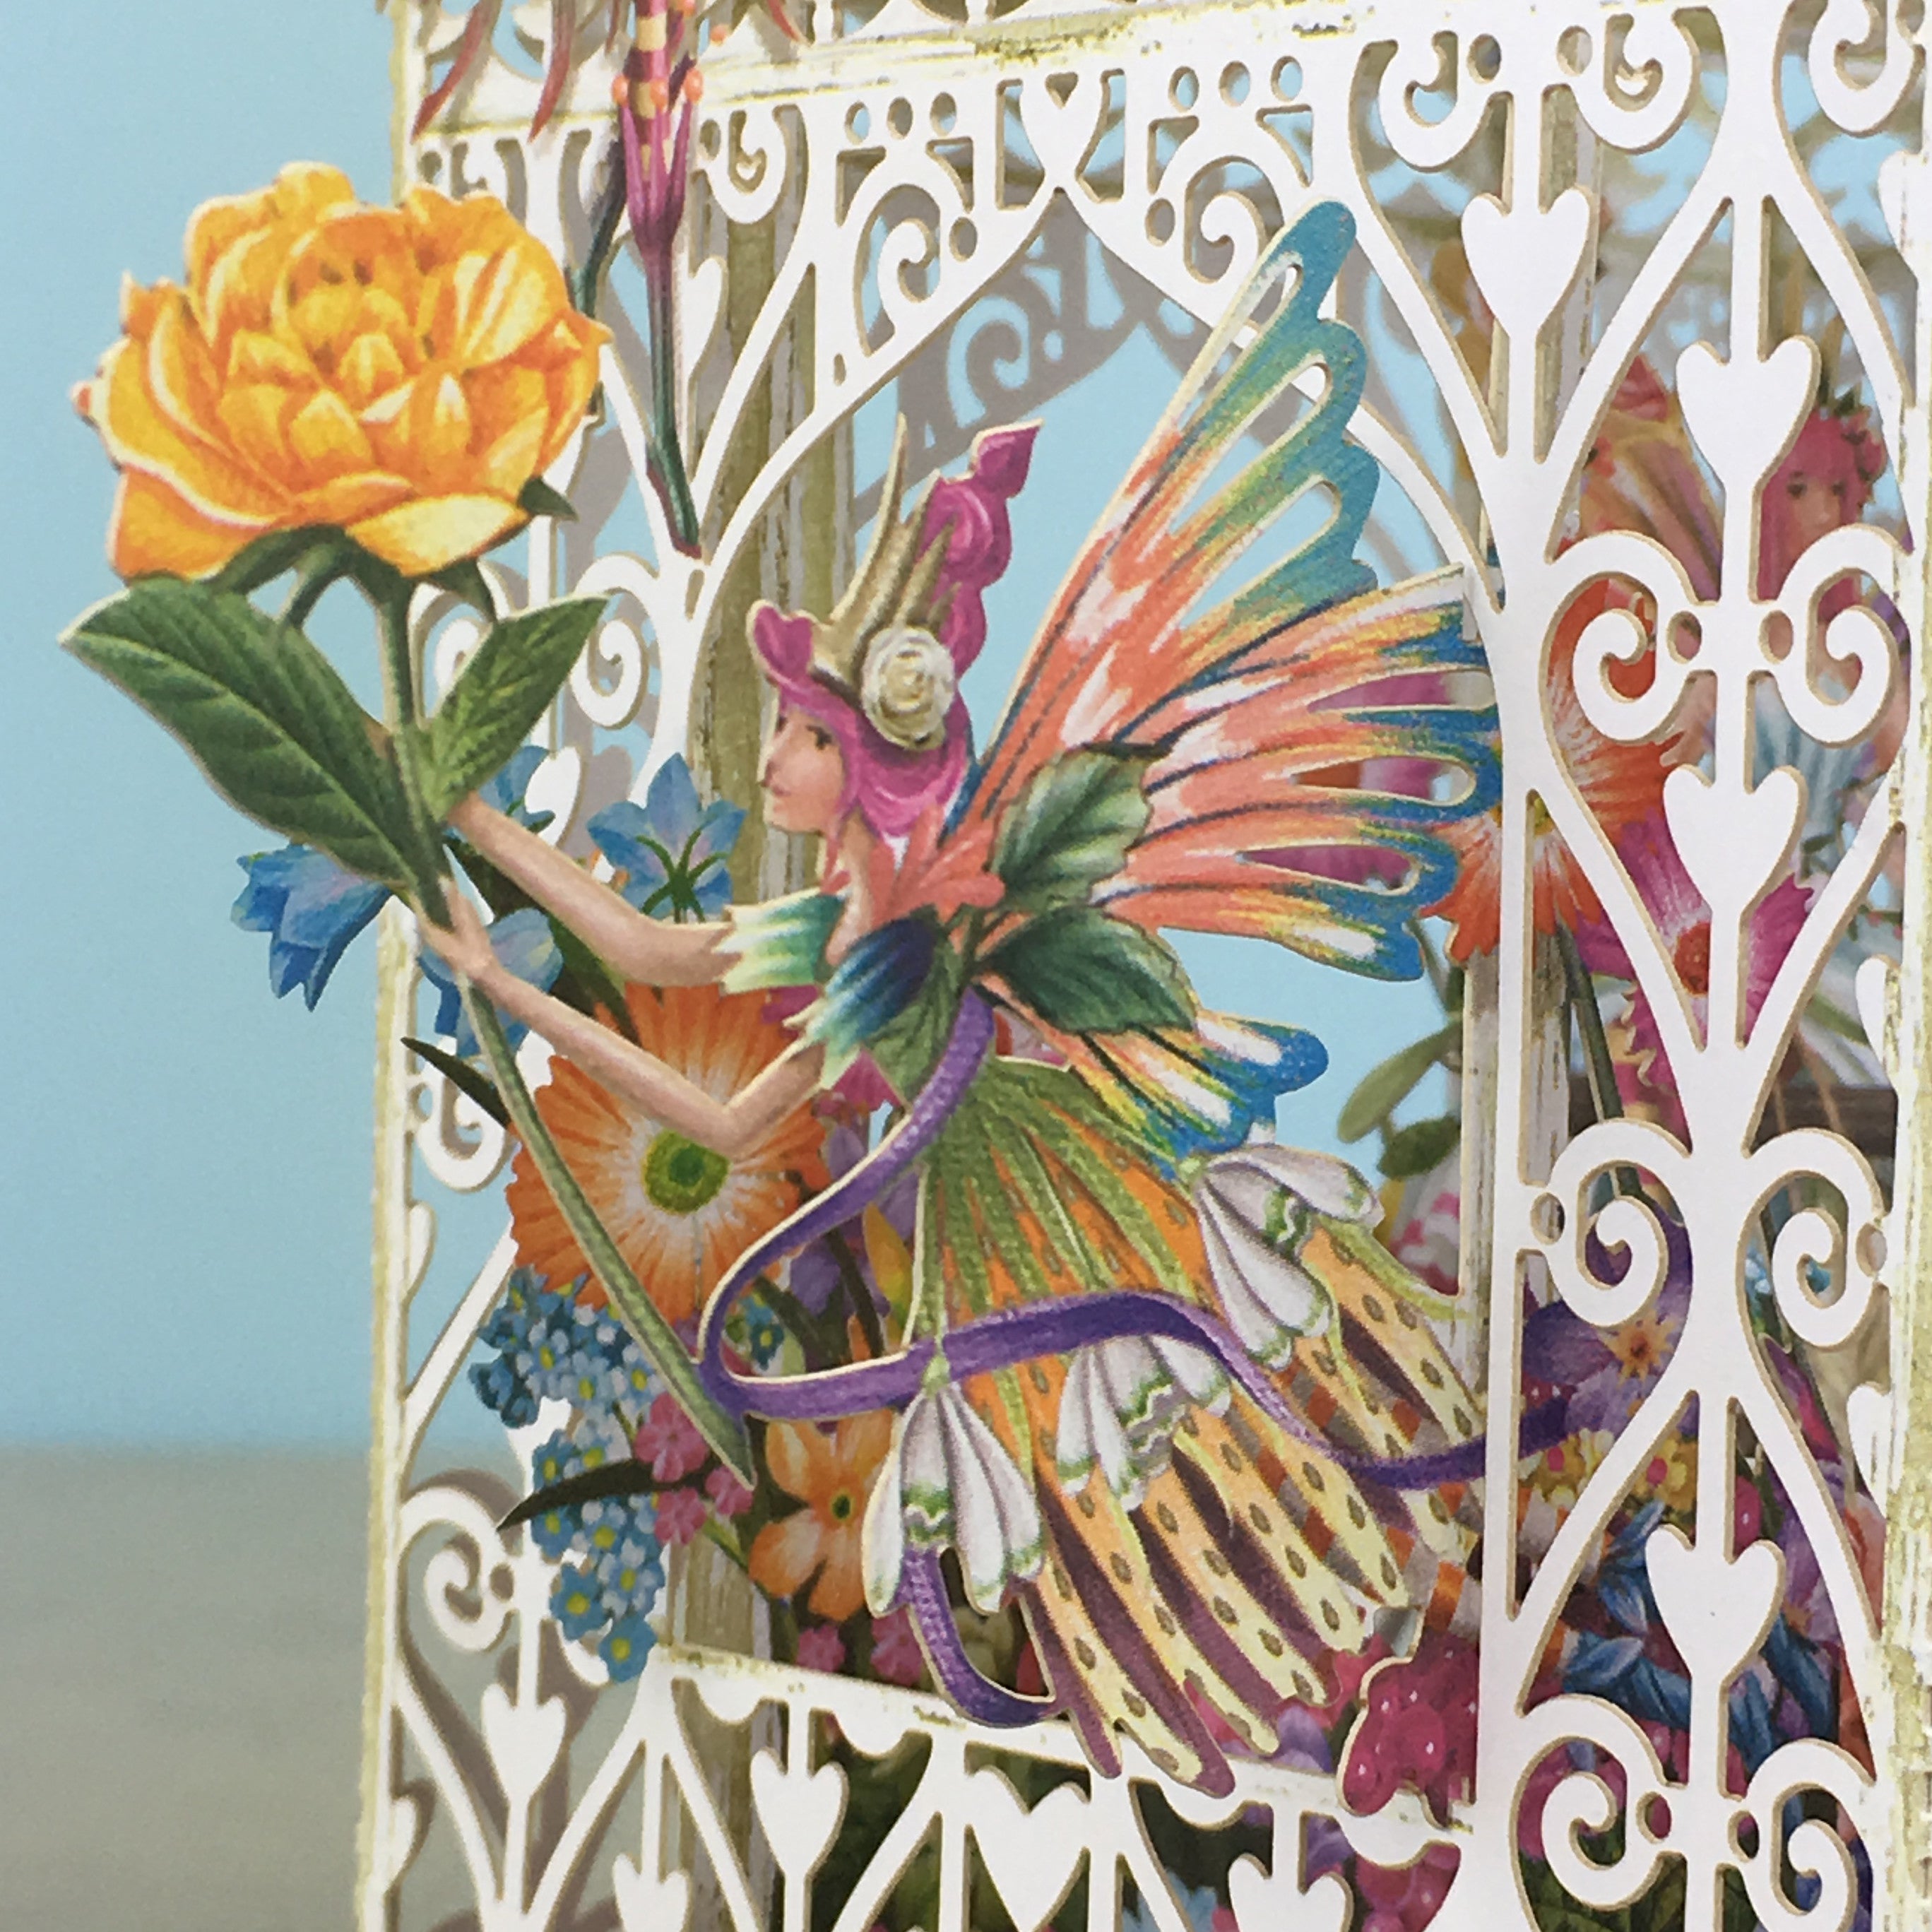 Flower Fairies play amongst flowers in laser cut paper birdcageby Me&amp;McQ